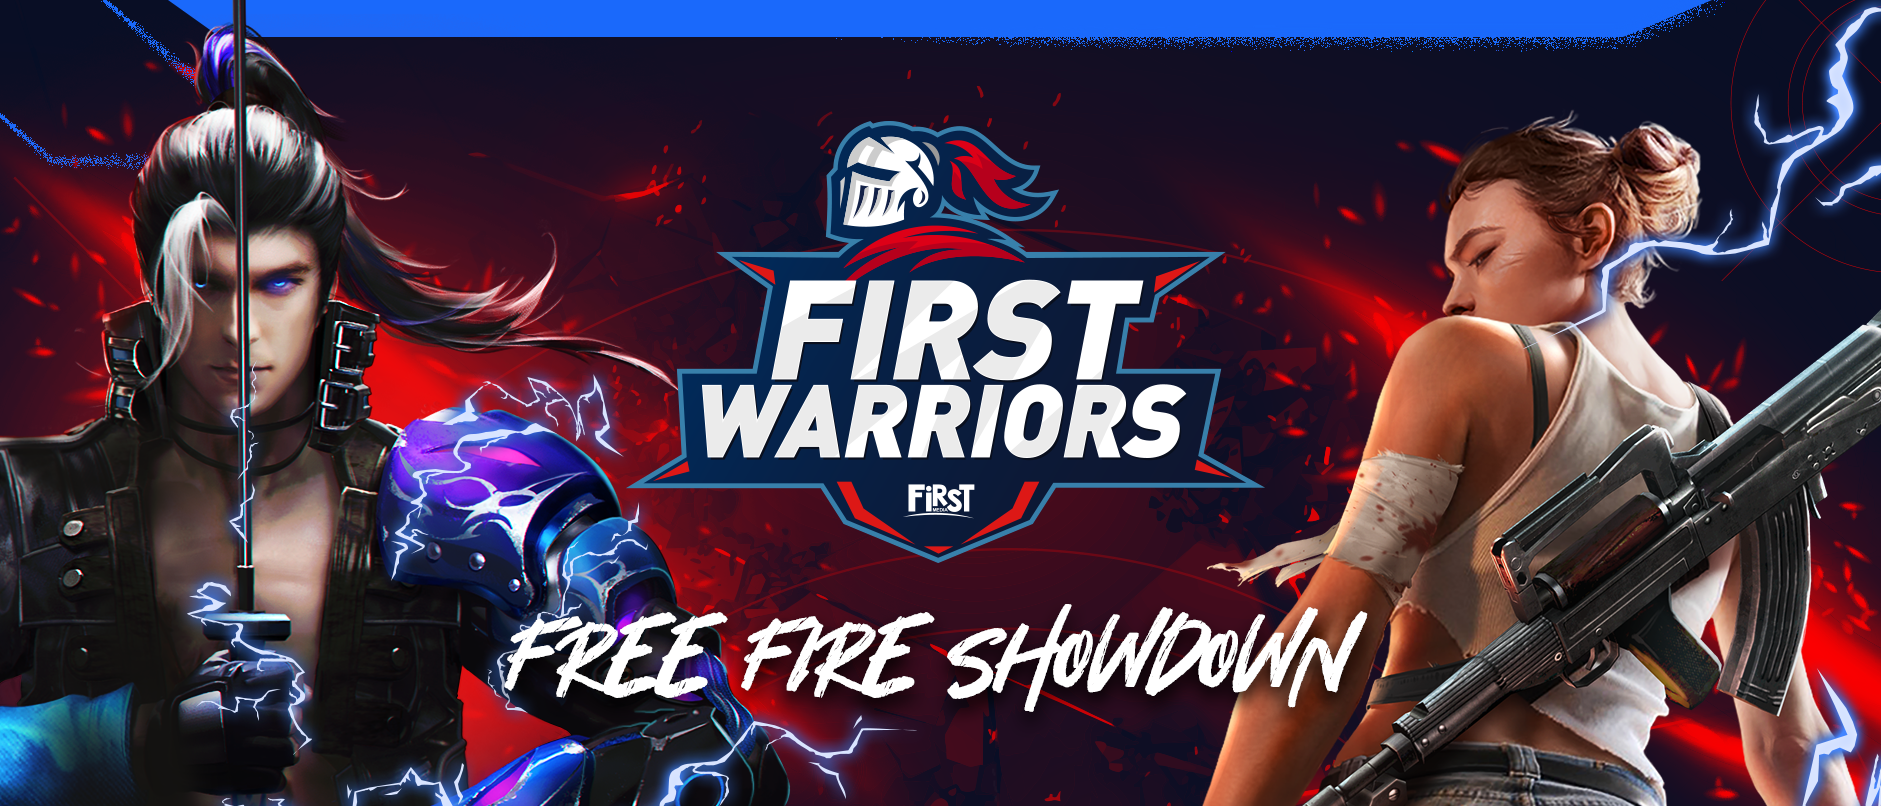 First Media Gelar First Warriors – Free Fire Showdown